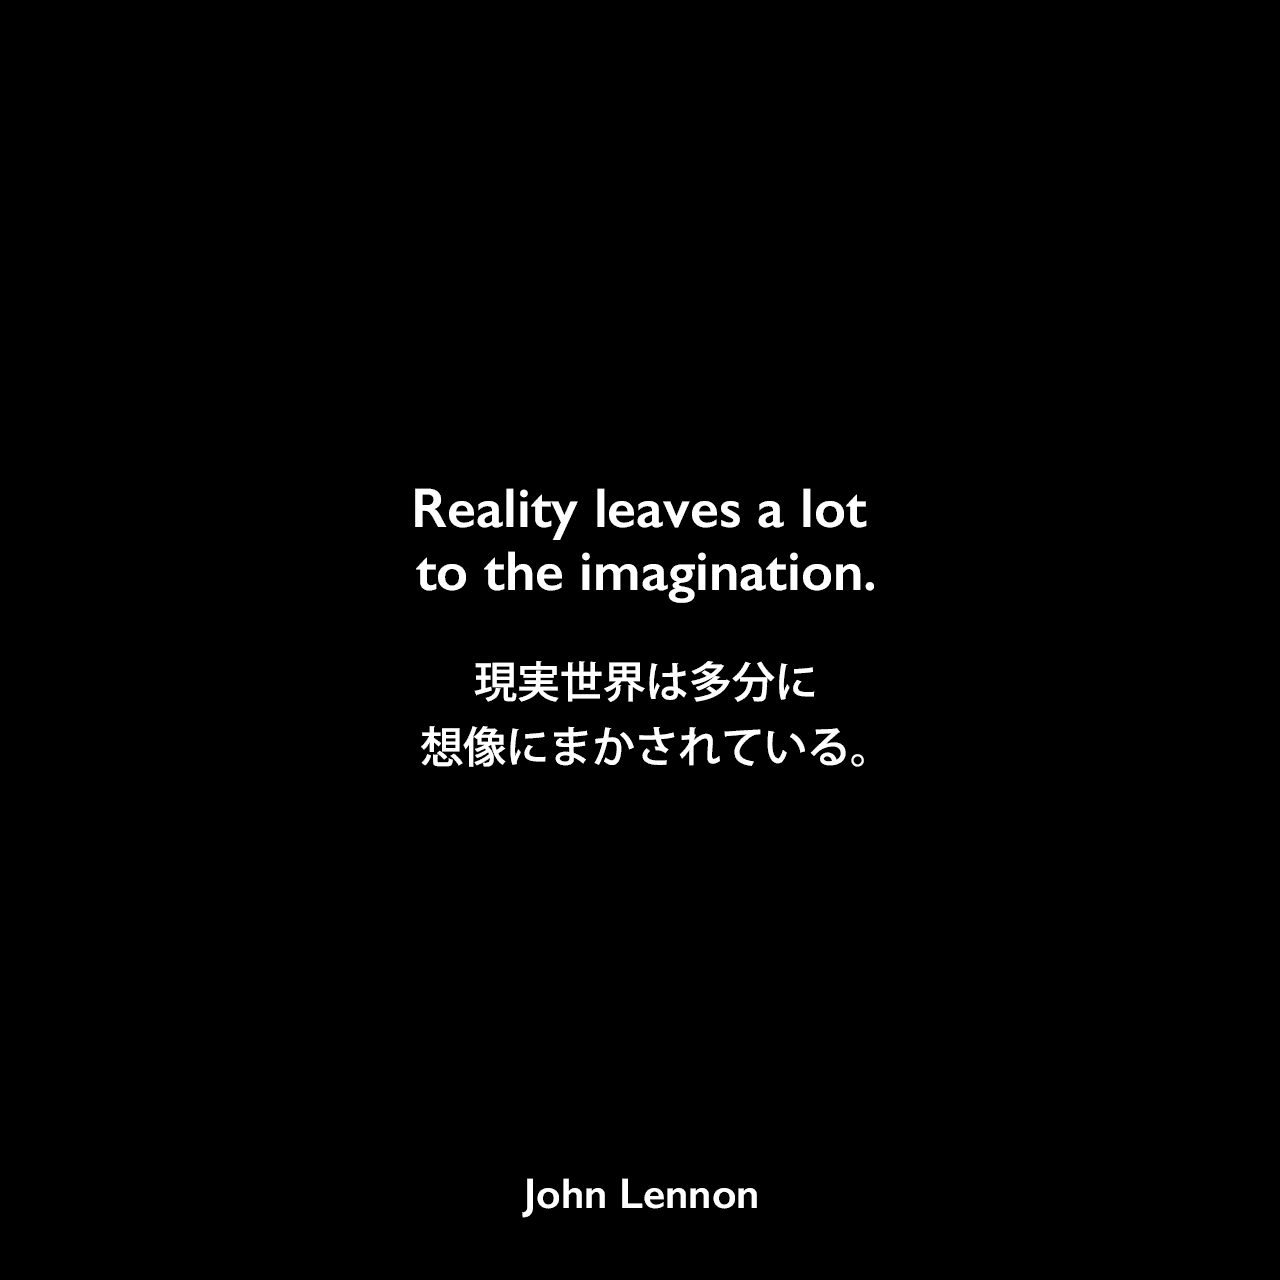 Reality leaves a lot to the imagination.現実世界は多分に想像にまかされている。John Lennon